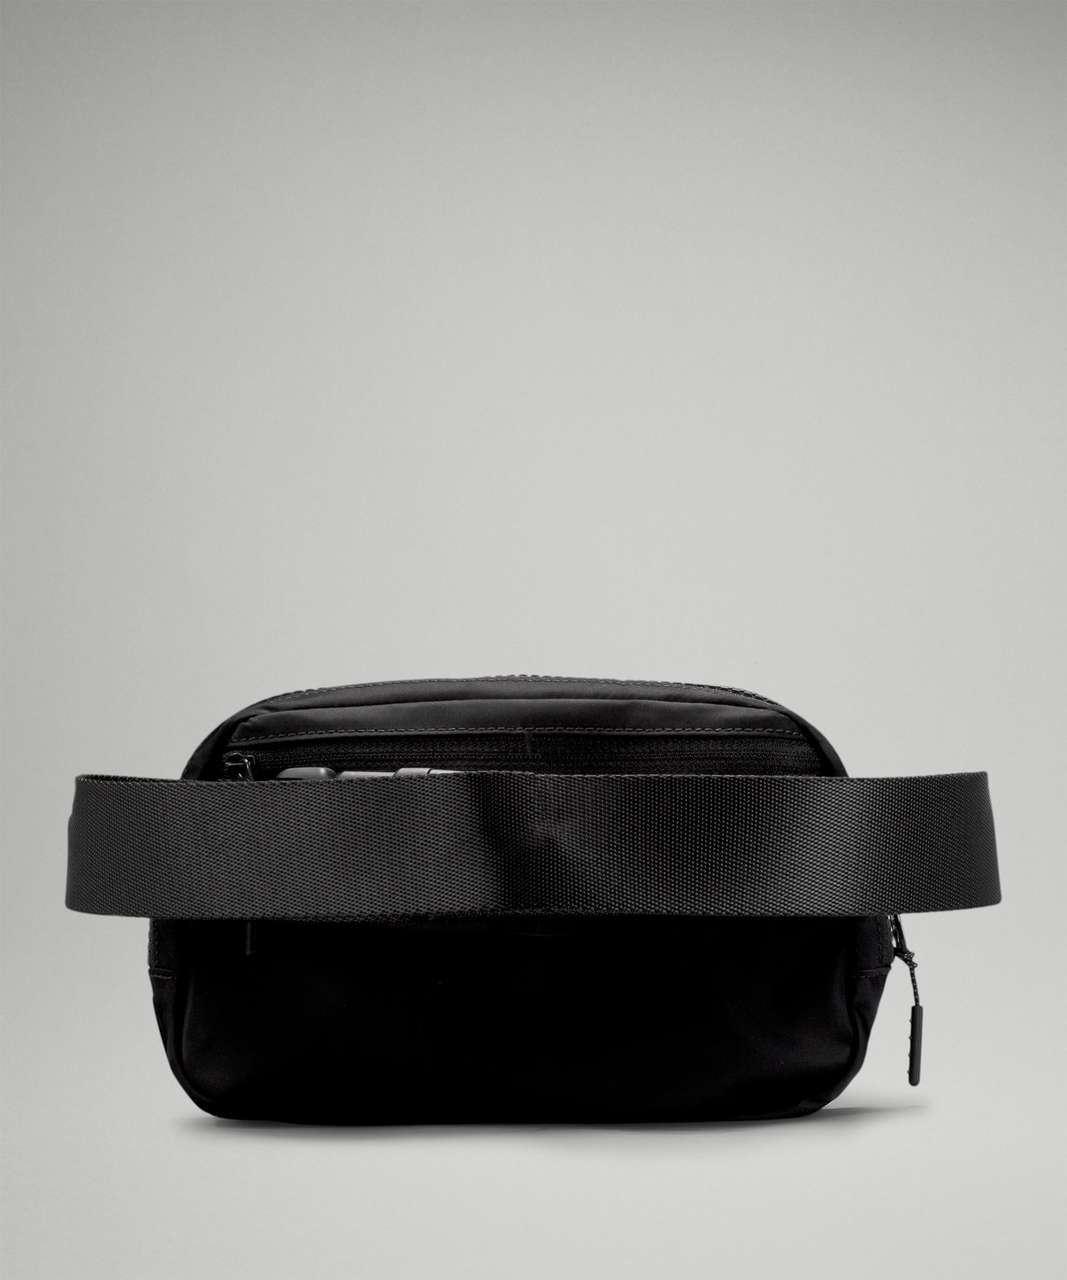 Lululemon Everywhere Belt Bag 1L - Black / White